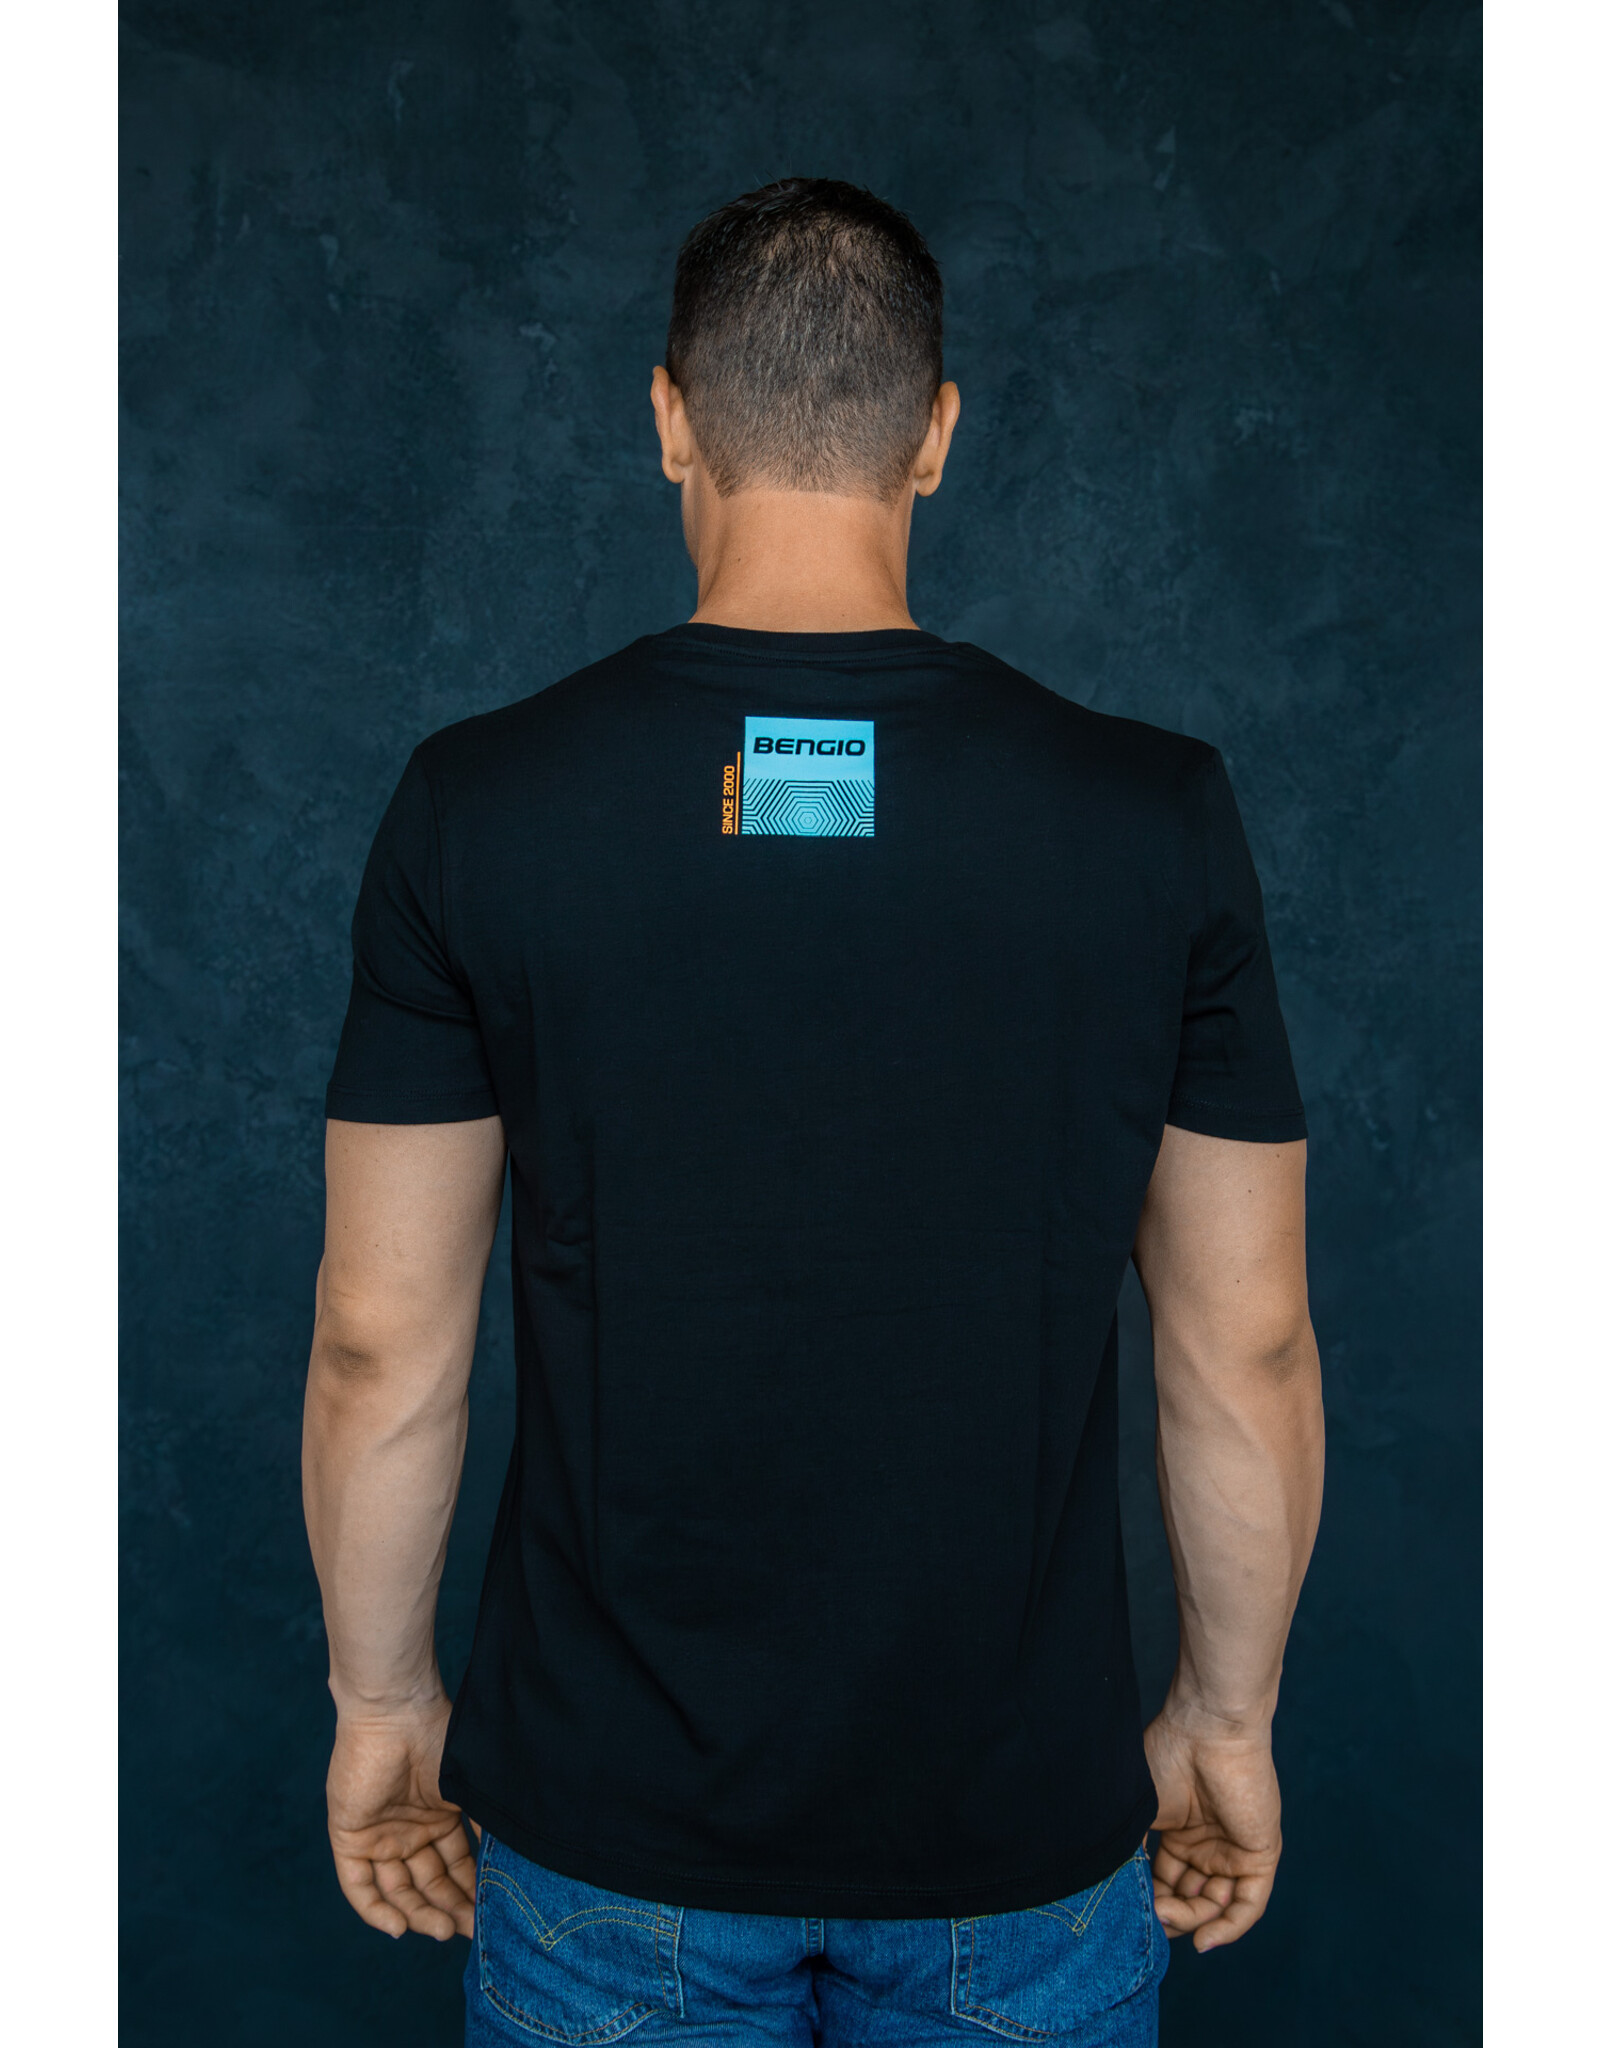 Bengio Bengio T-shirt black / blue 100% organic Size L